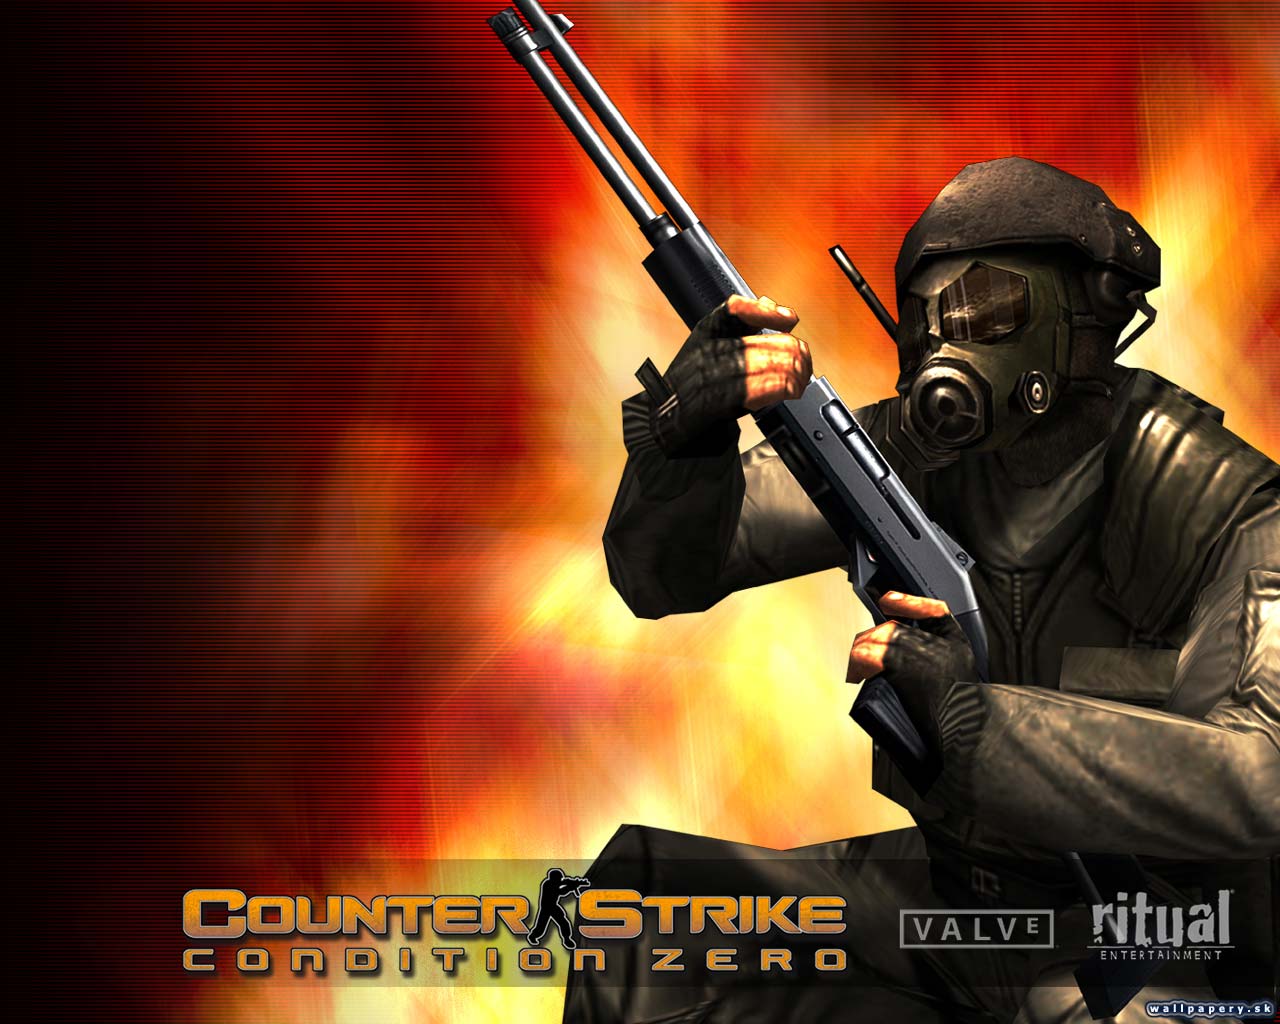 X 0 game. Counter-Strike, Counter-Strike: condition Zero. Counter Strike фото. Counter Strike иллюстрации. Counter Strike 1.6.